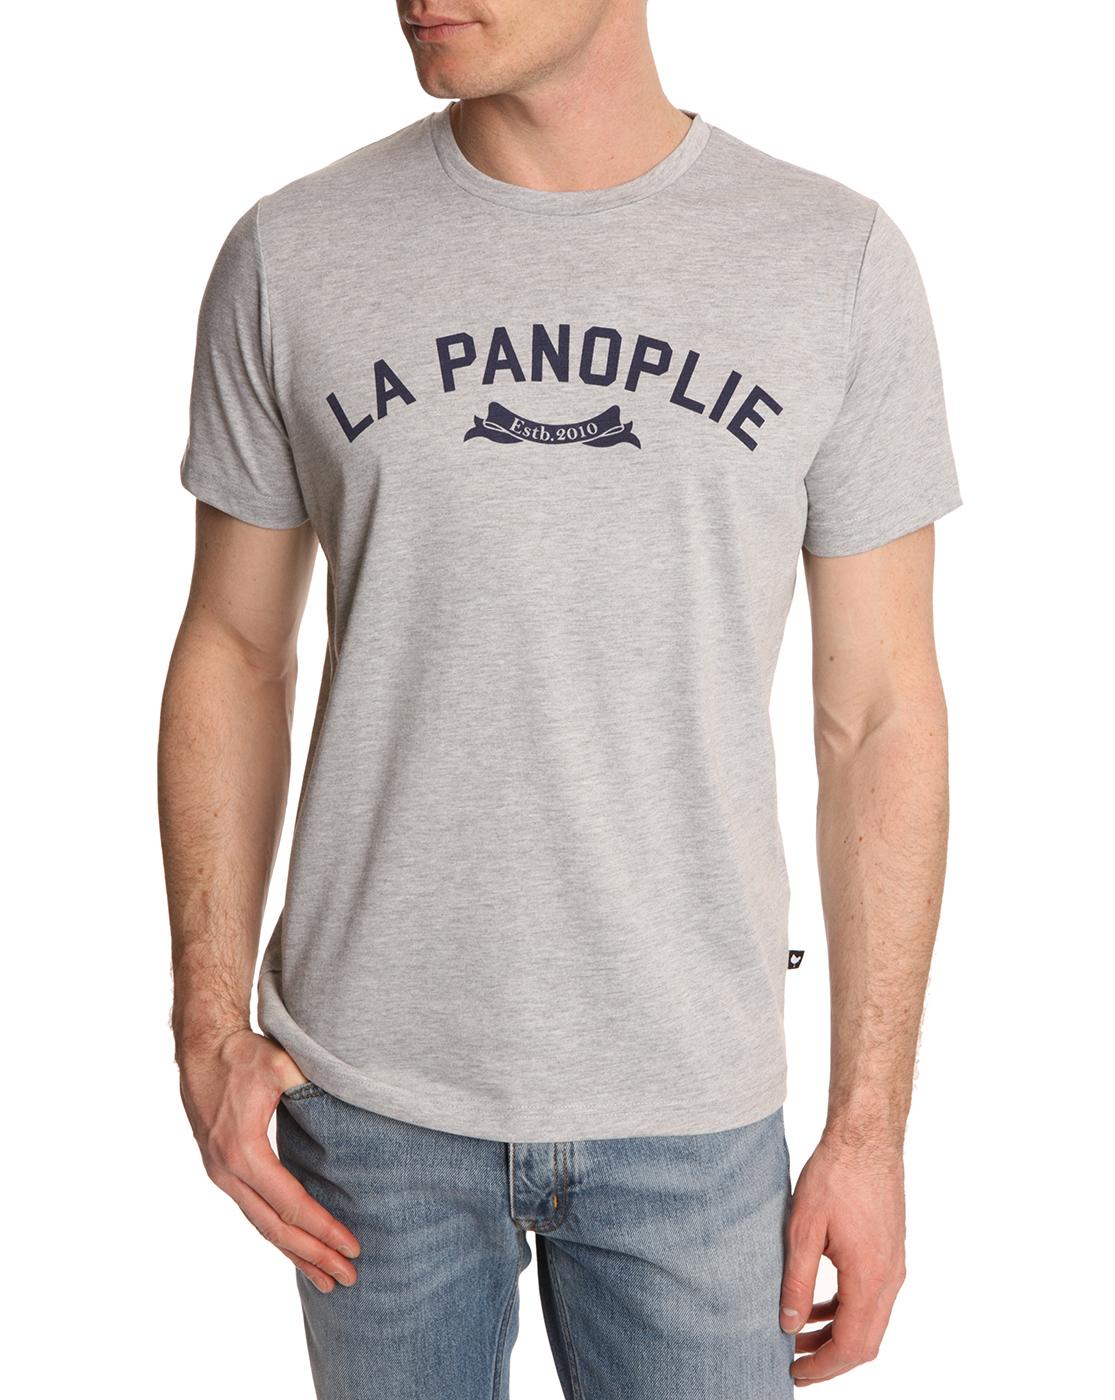 Foto Camiseta La Panoplie gris